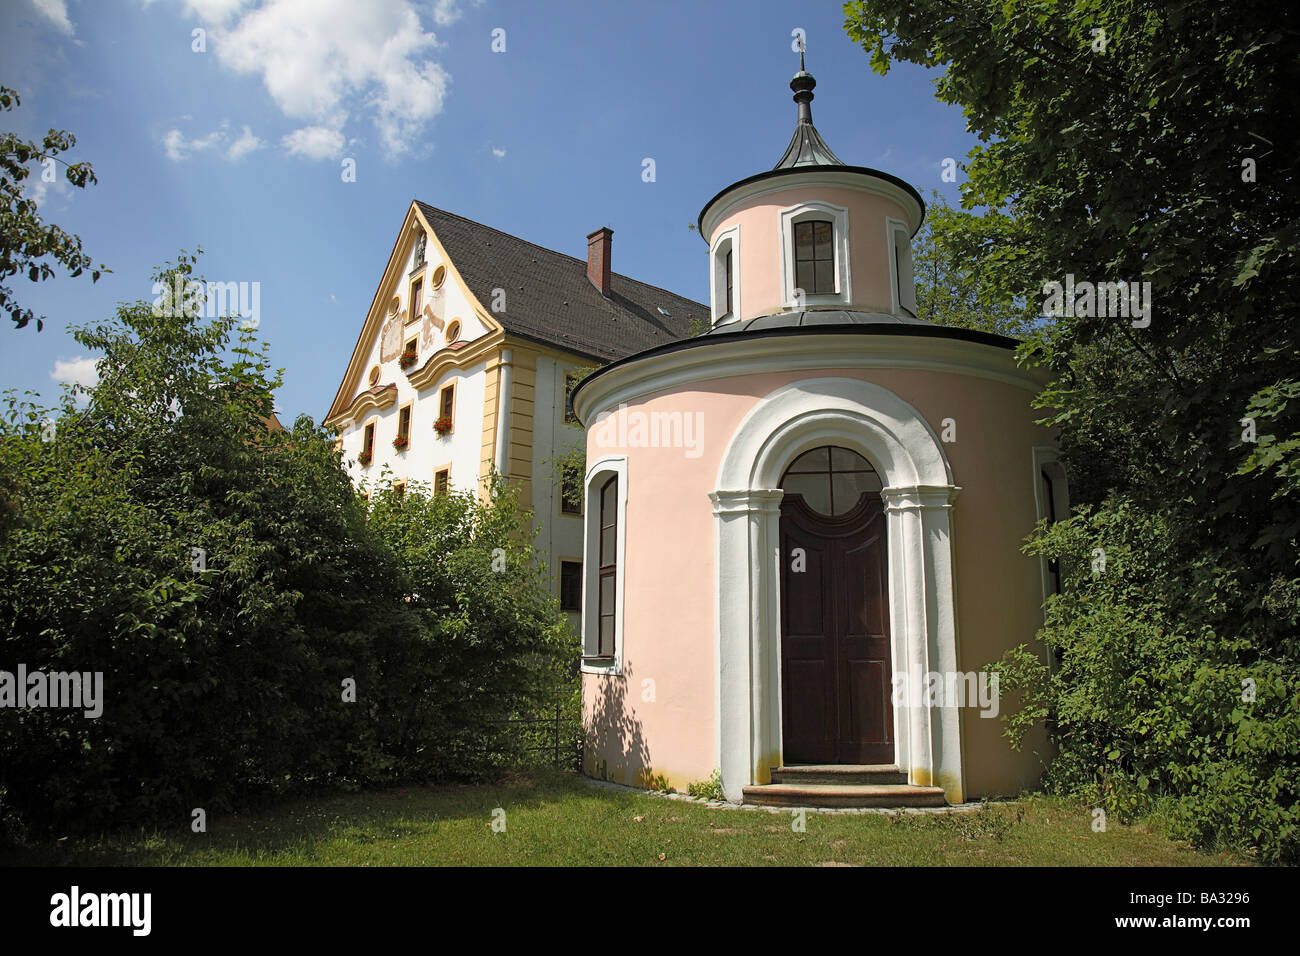 Monastery of Waldsassen Upper Palatinate Bavaria Germany Stock Photo